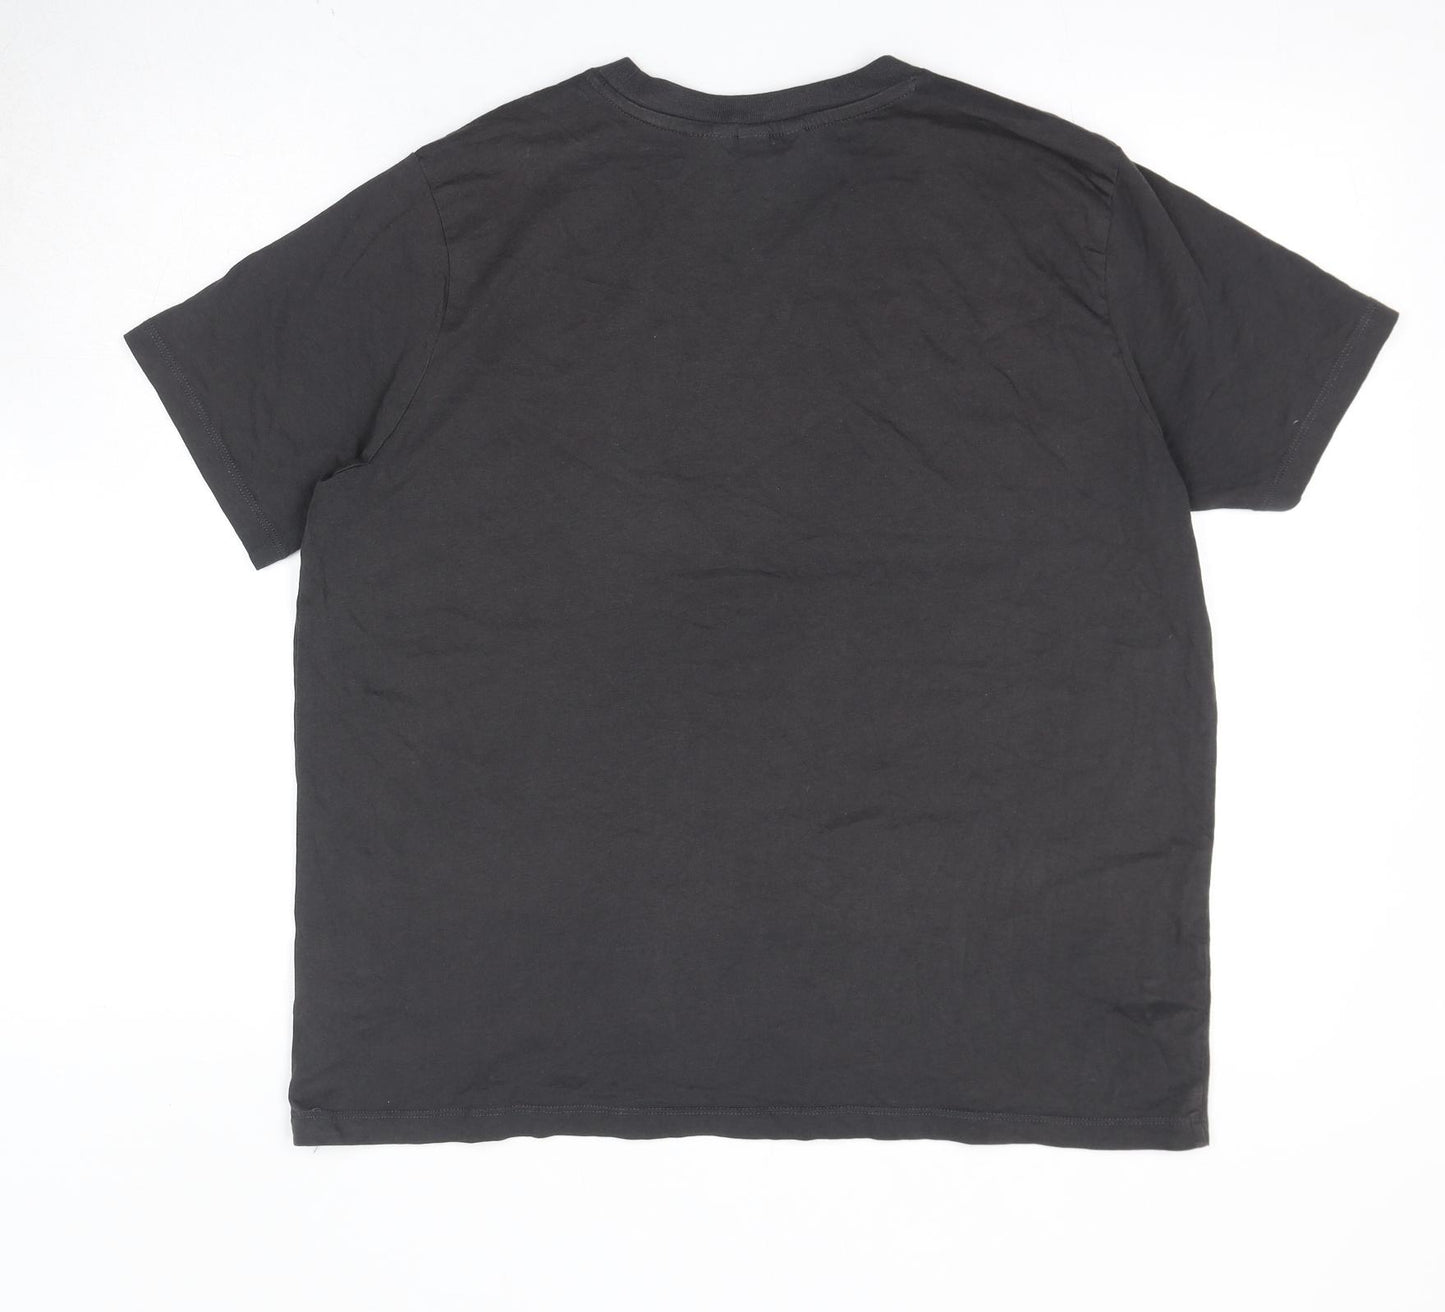 H&M Mens Black Cotton T-Shirt Size L Crew Neck - Mickey Mouse